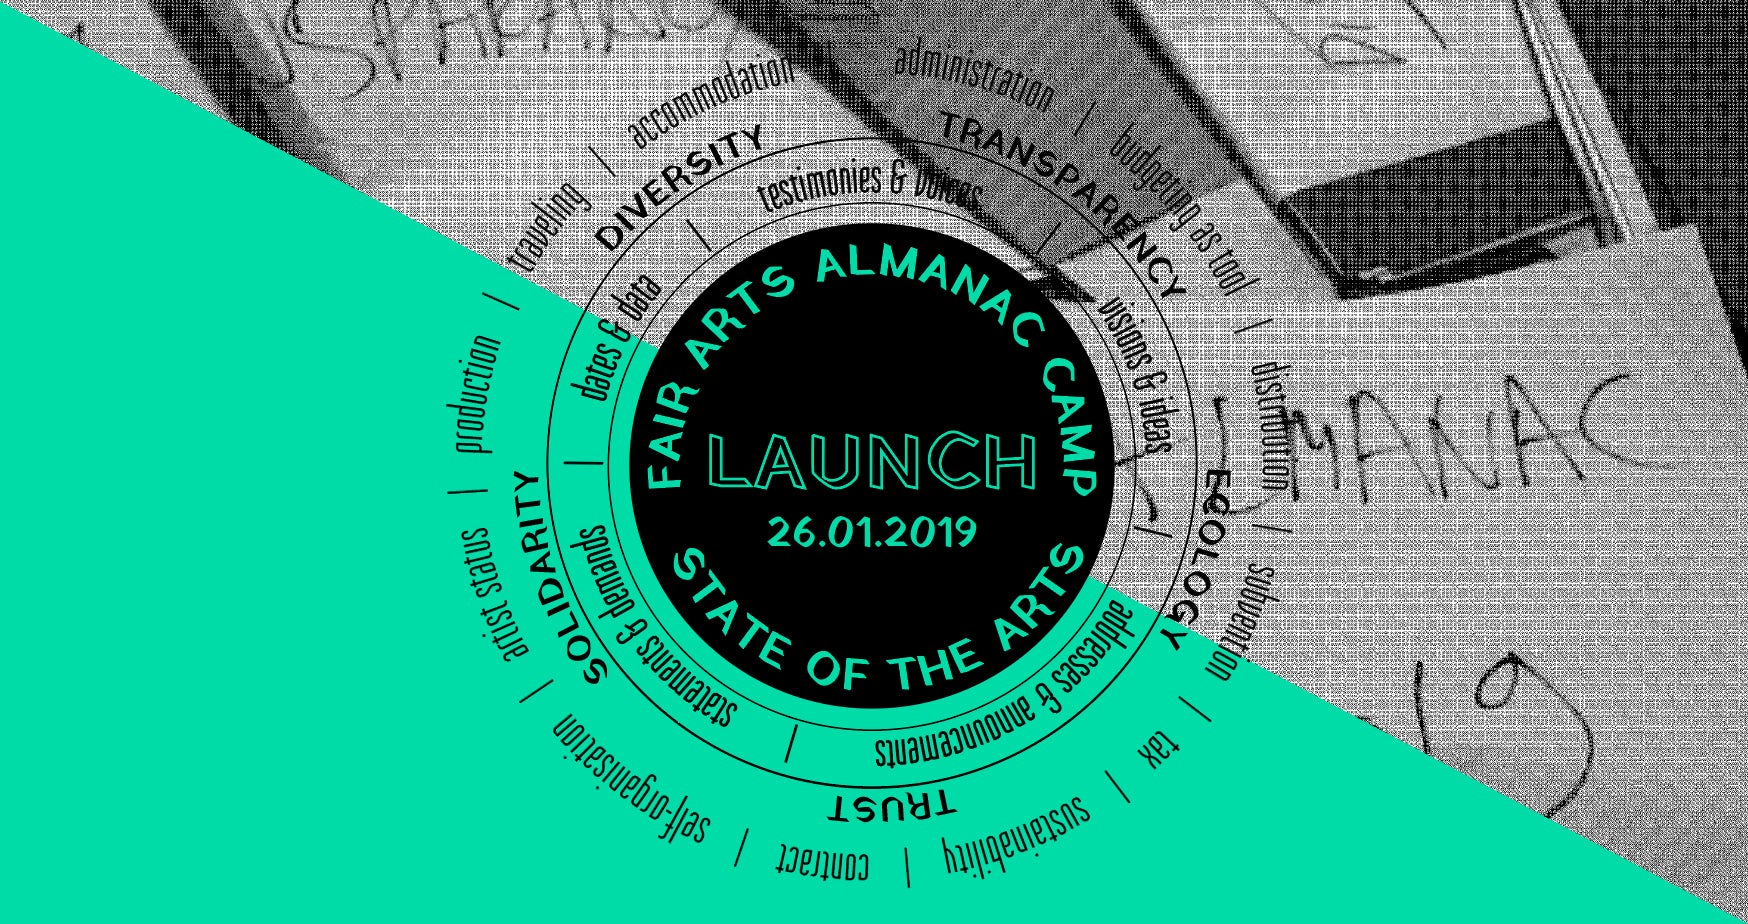 State Of The Arts (SOTA) - Fair Arts Almanac launch